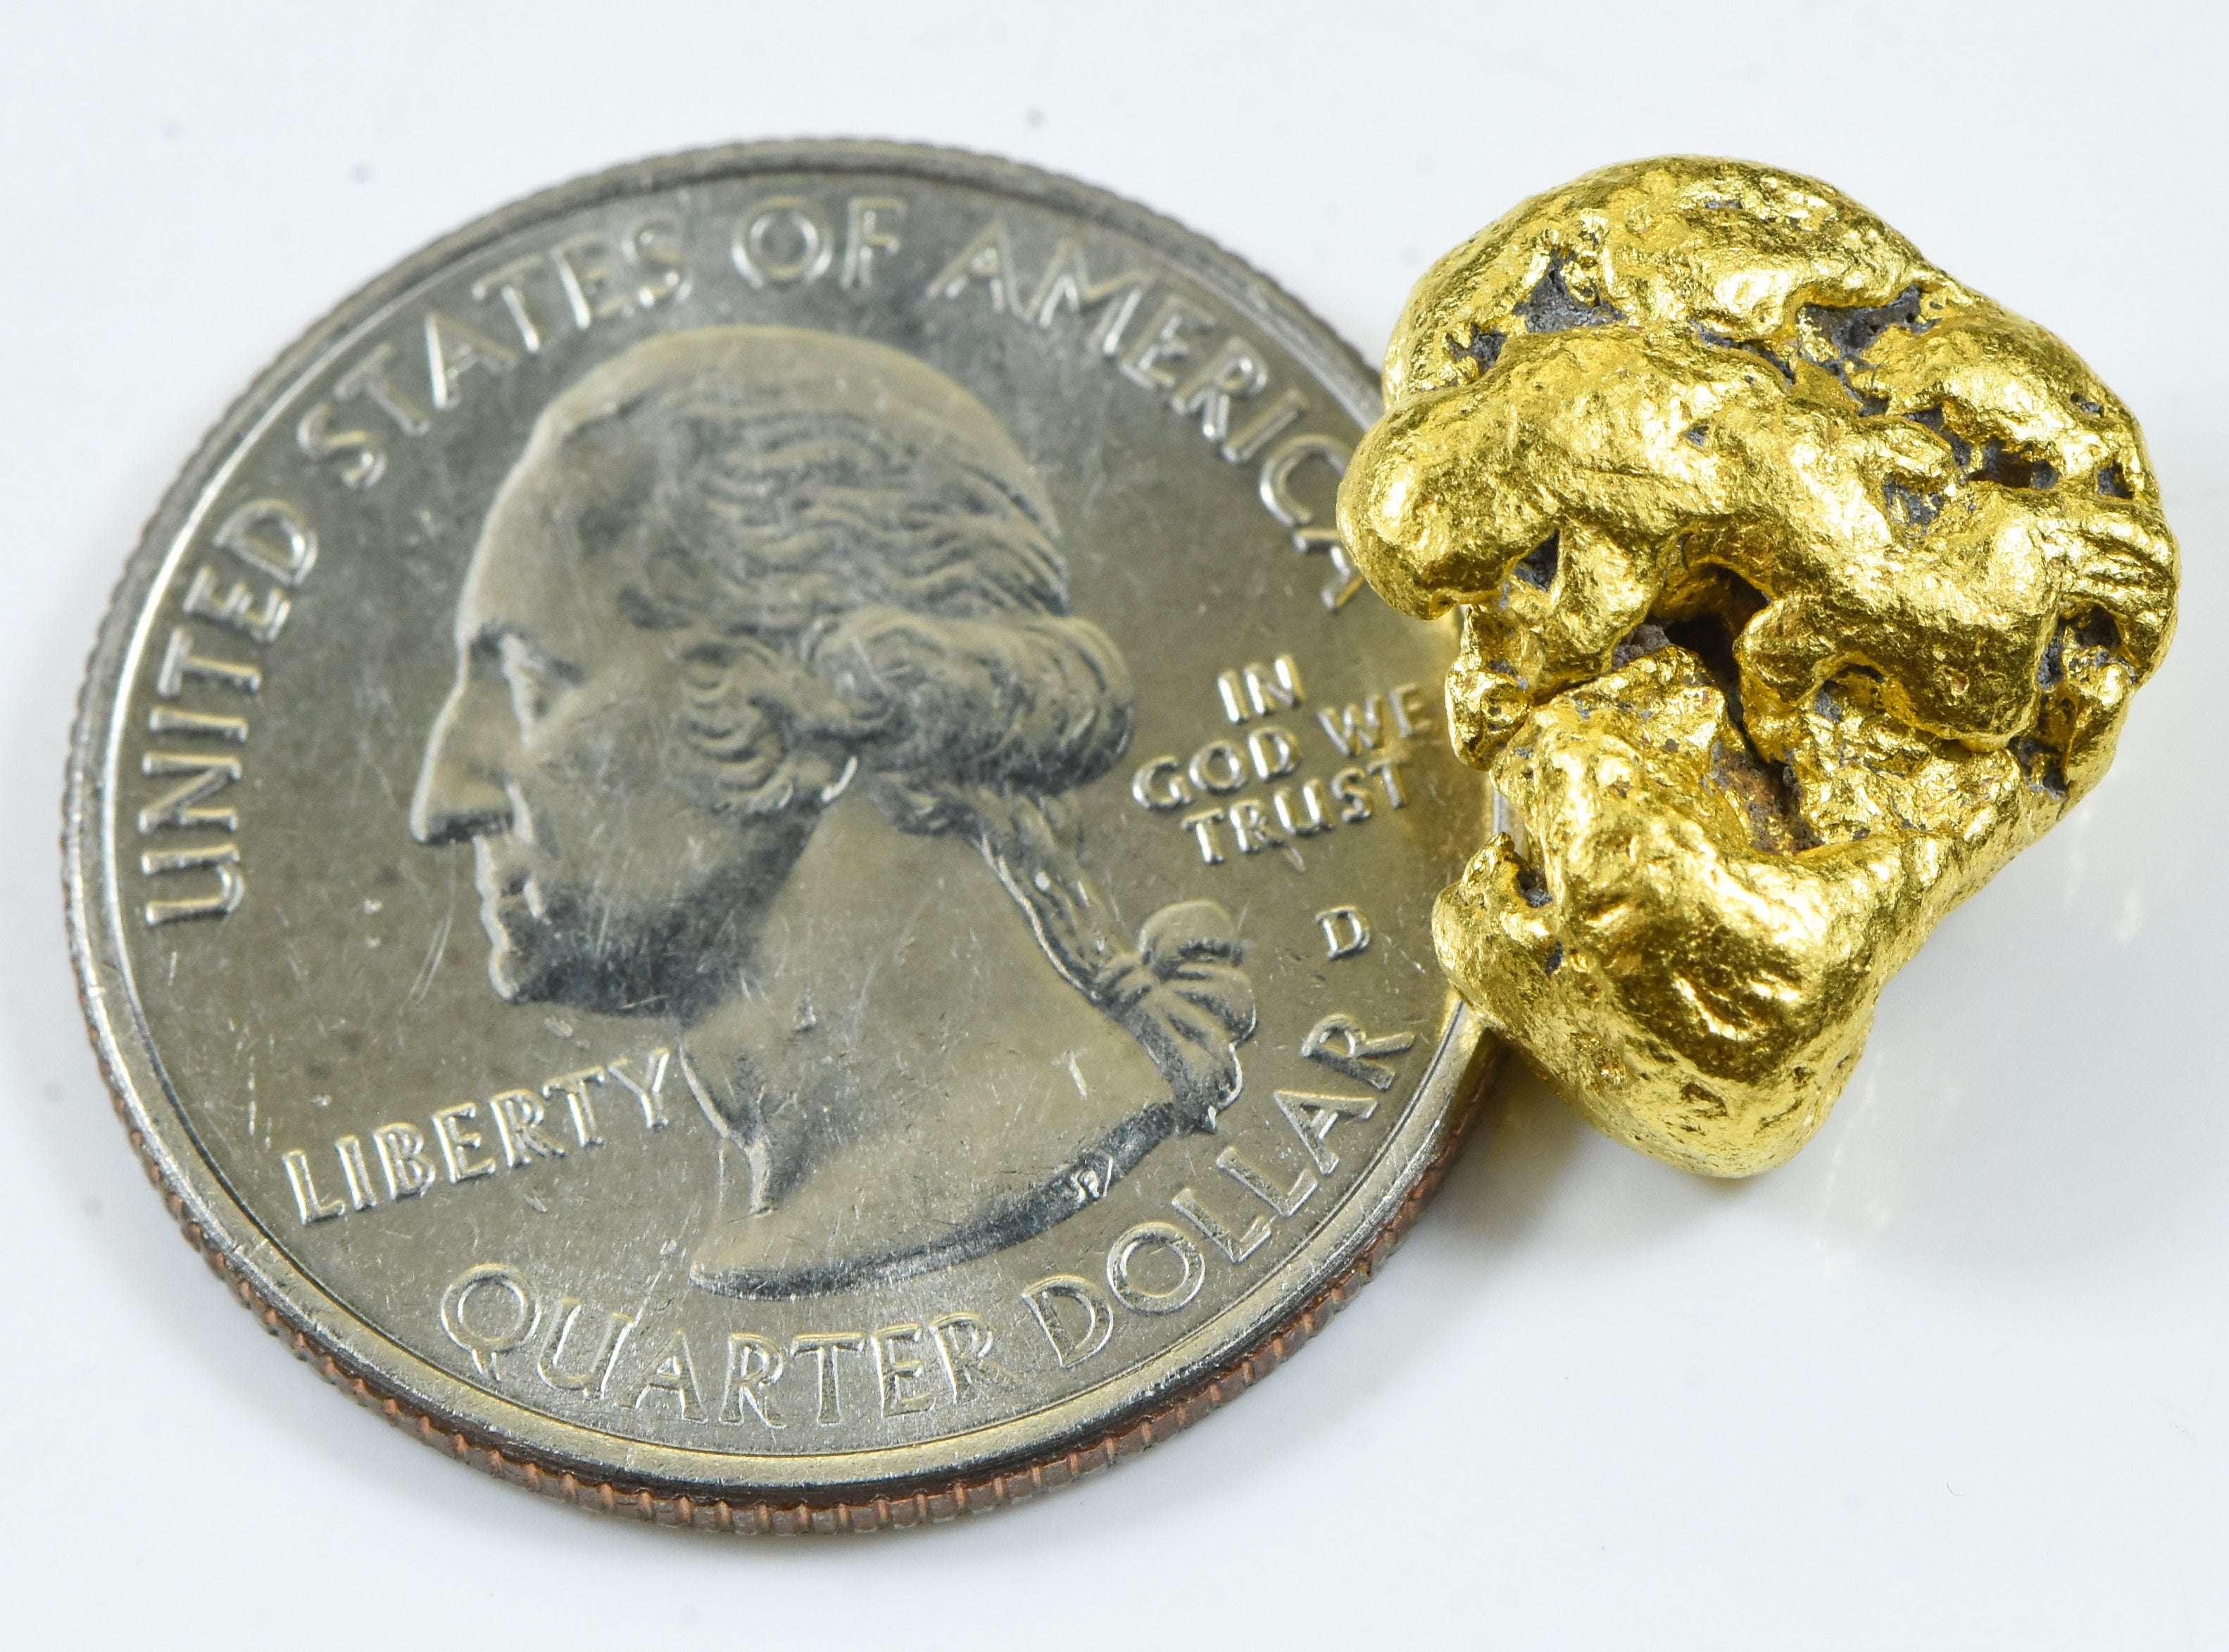 #113 Sonora Mexico Natural Gold Nugget 9.55 Grams Genuine